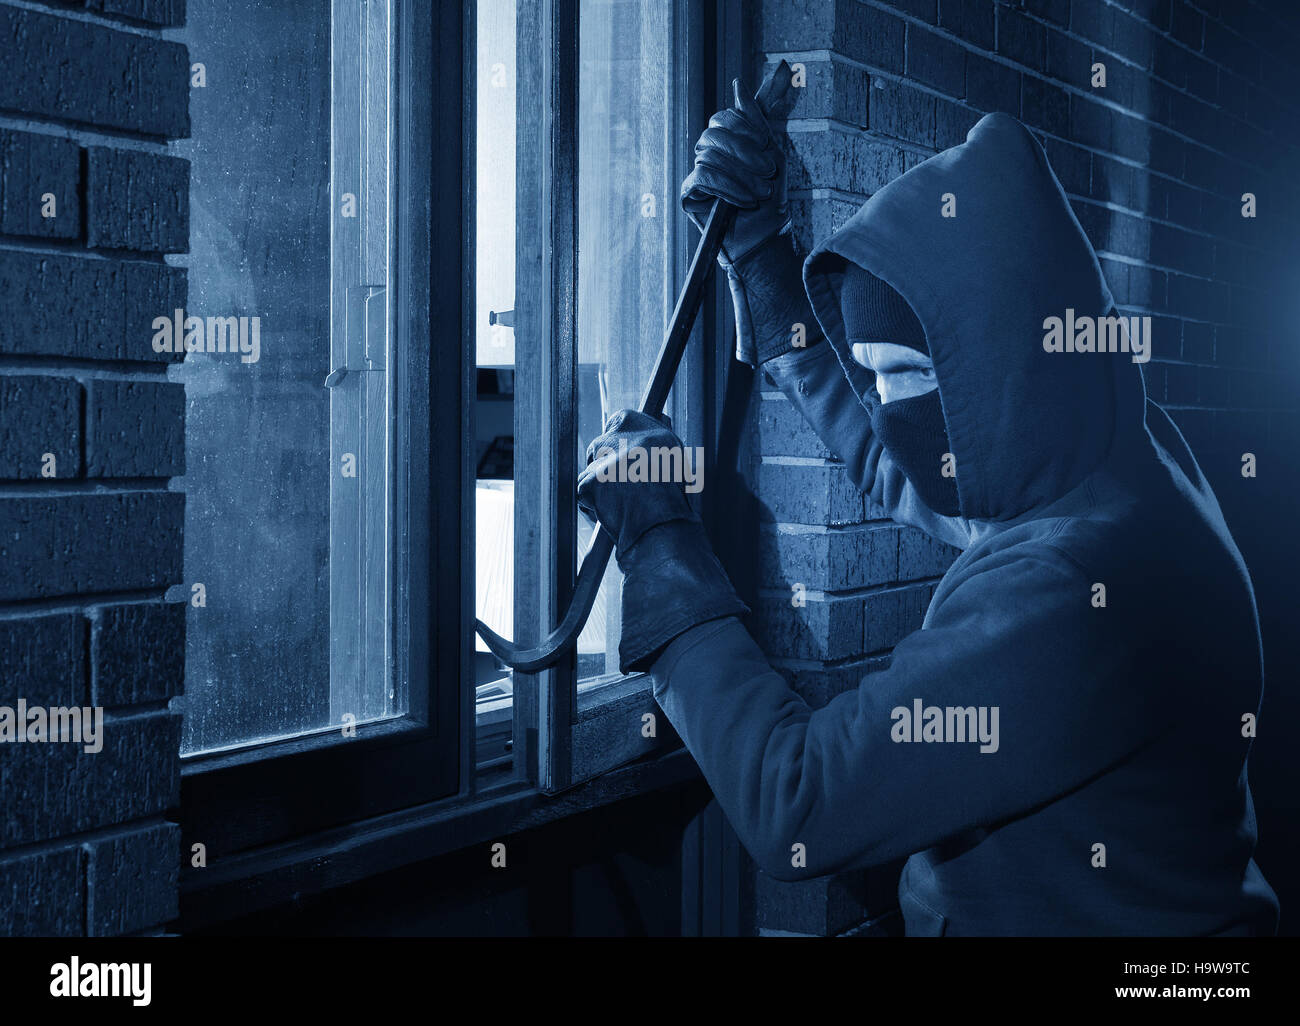 Burglar Using Crowbar To Break Into a House at night Stock Photo